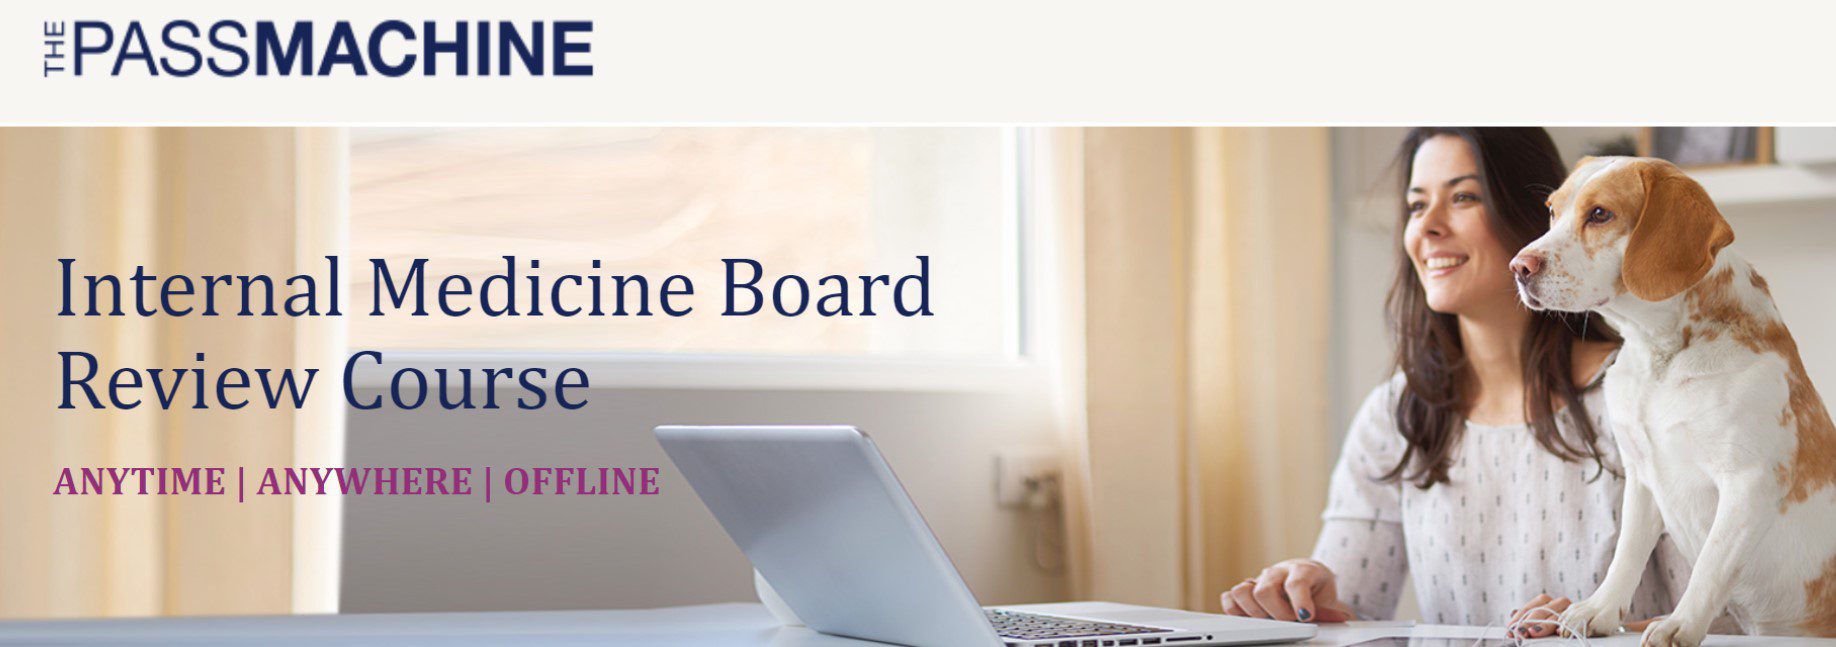 PassMachine Internal Medicine Board Review 2020 Free Download